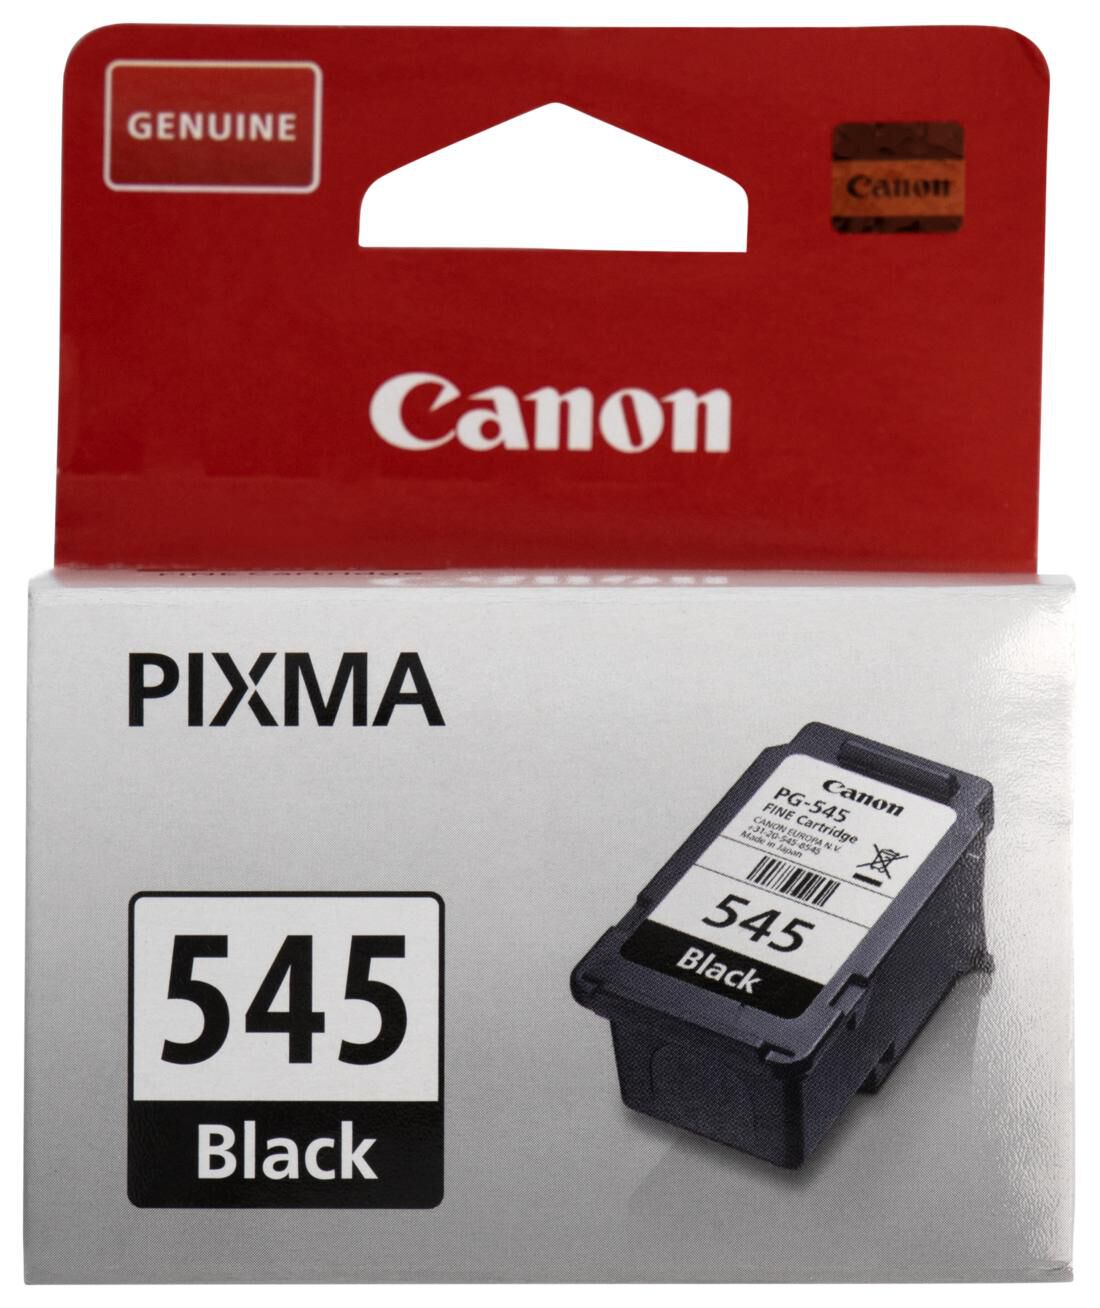 cartridge Canon PG-545 zwart - HEMA